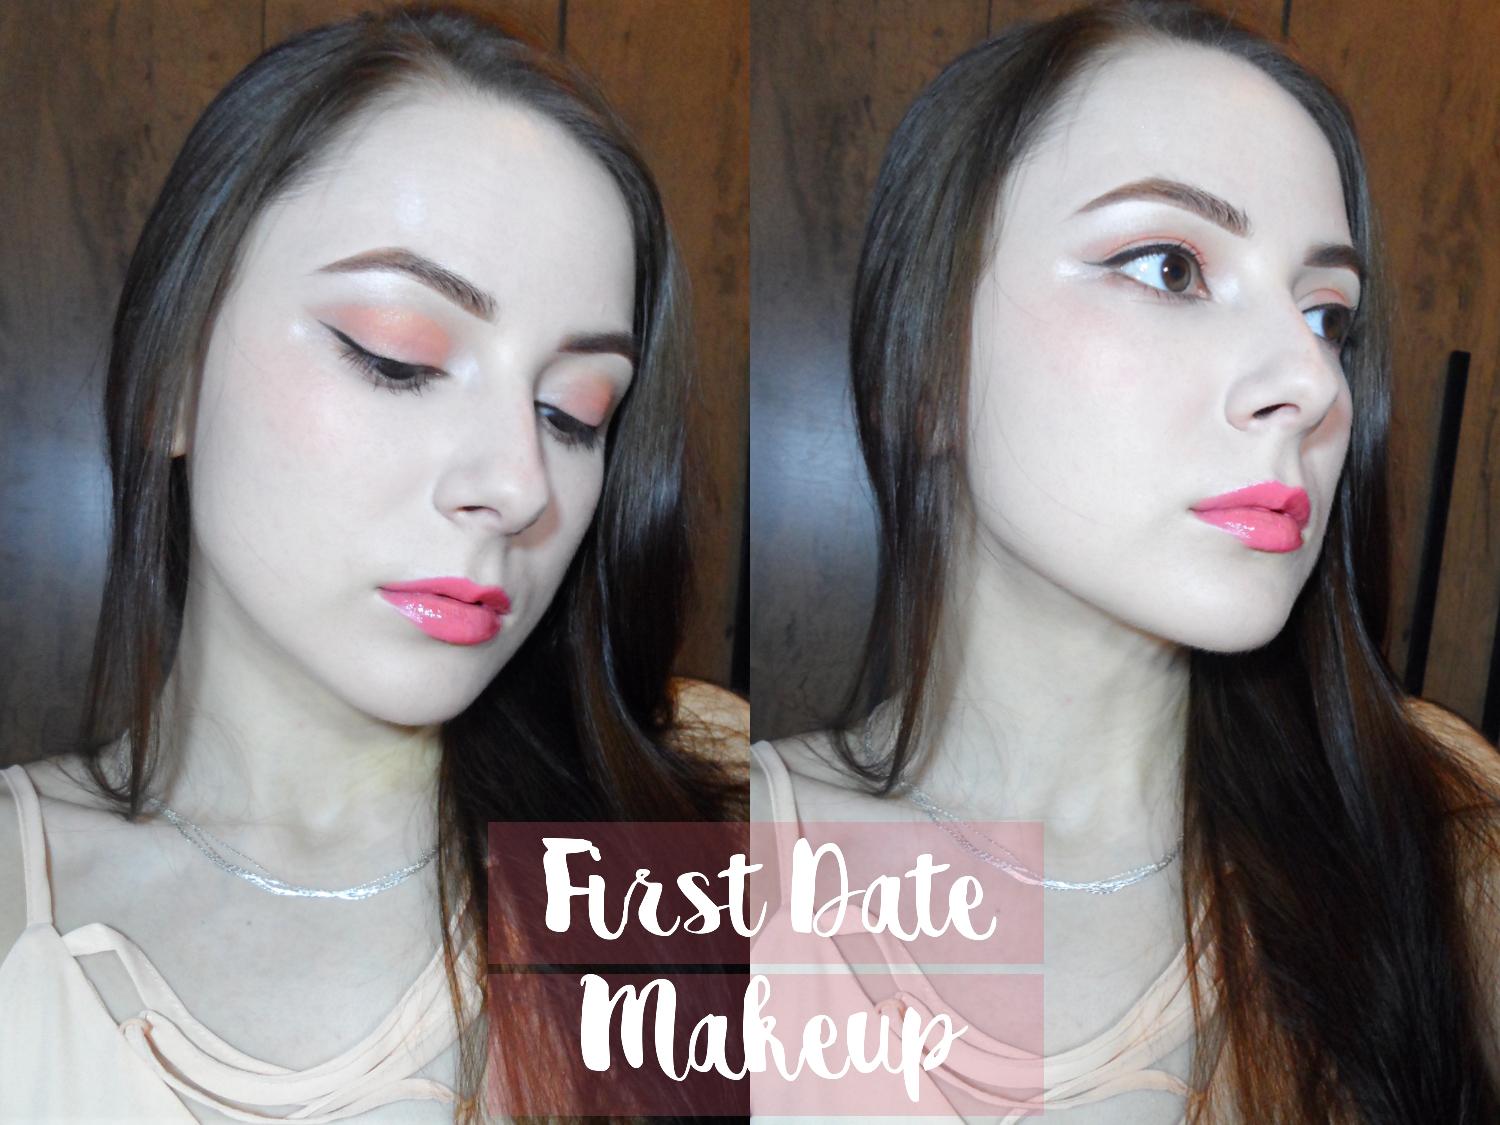 Liz Breygel shows the beautiful, first date makeup look